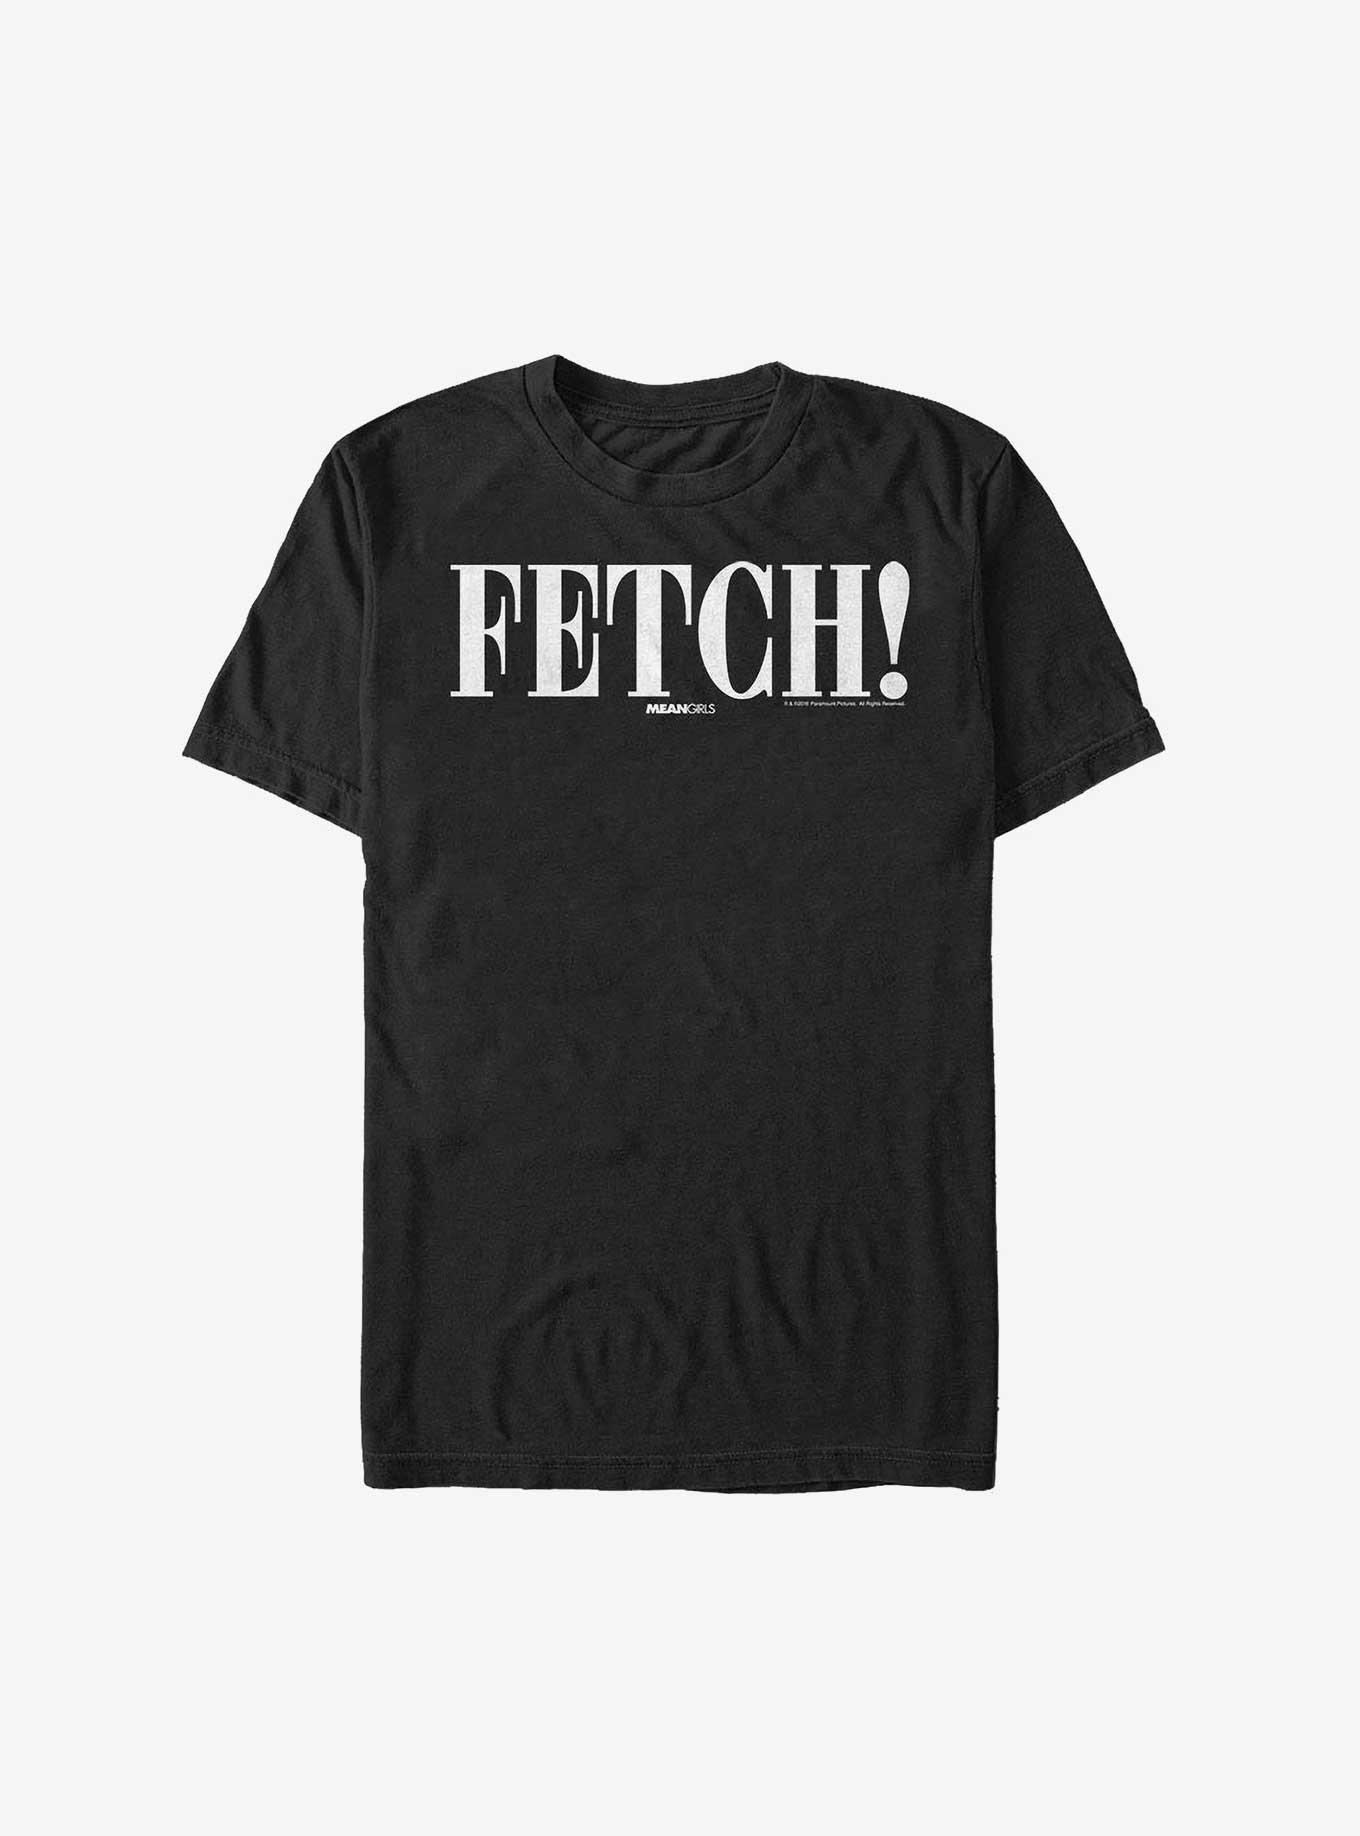 Mean Girls Fetch T-Shirt, BLACK, hi-res